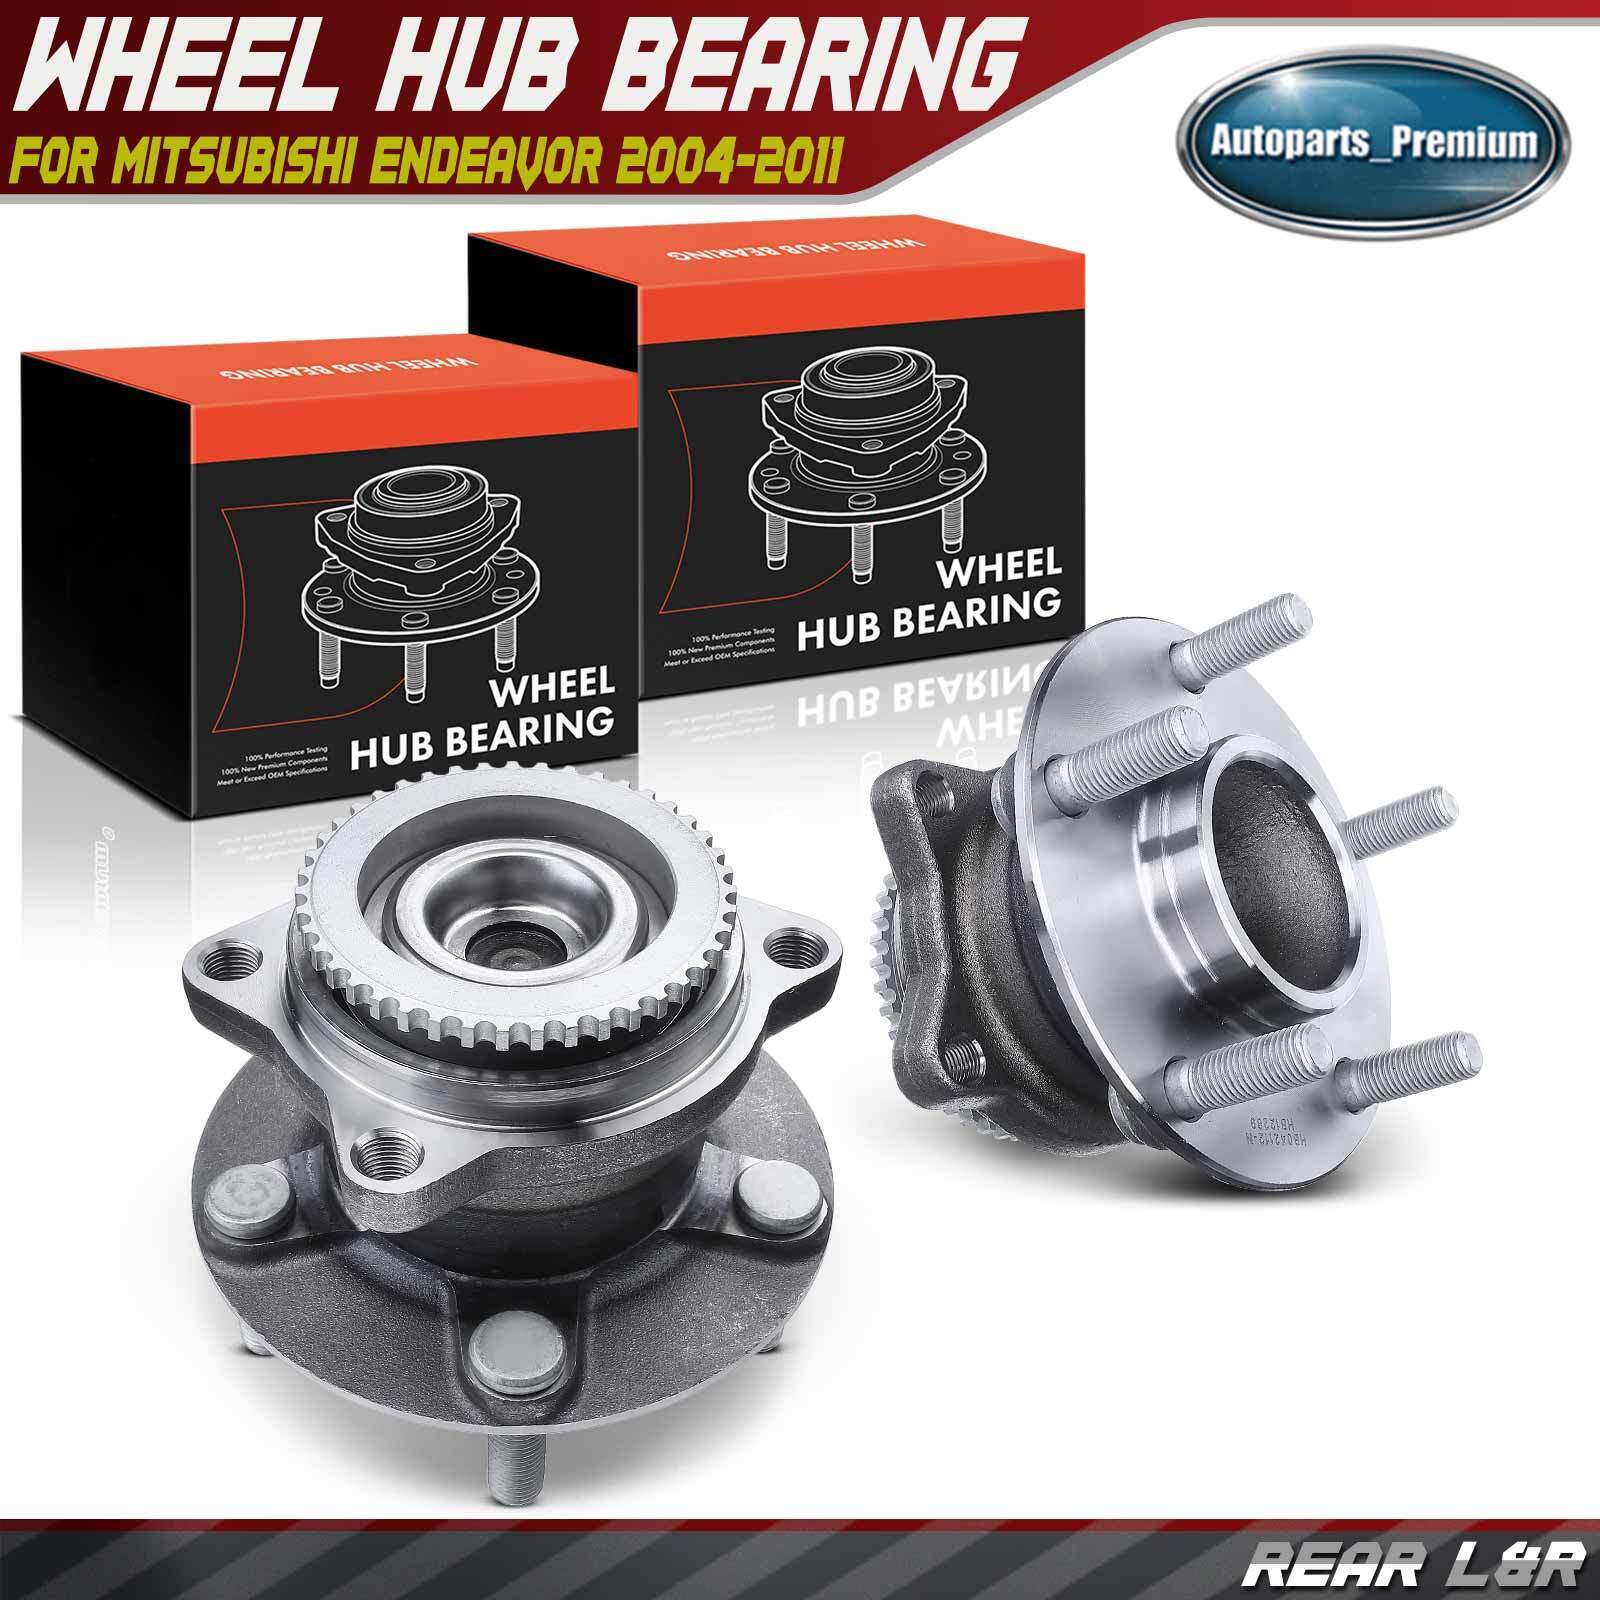 2x Rear Wheel Hub Bearing Assembly for Mitsubishi Endeavor 2004-2011 V6 3.8L FWD